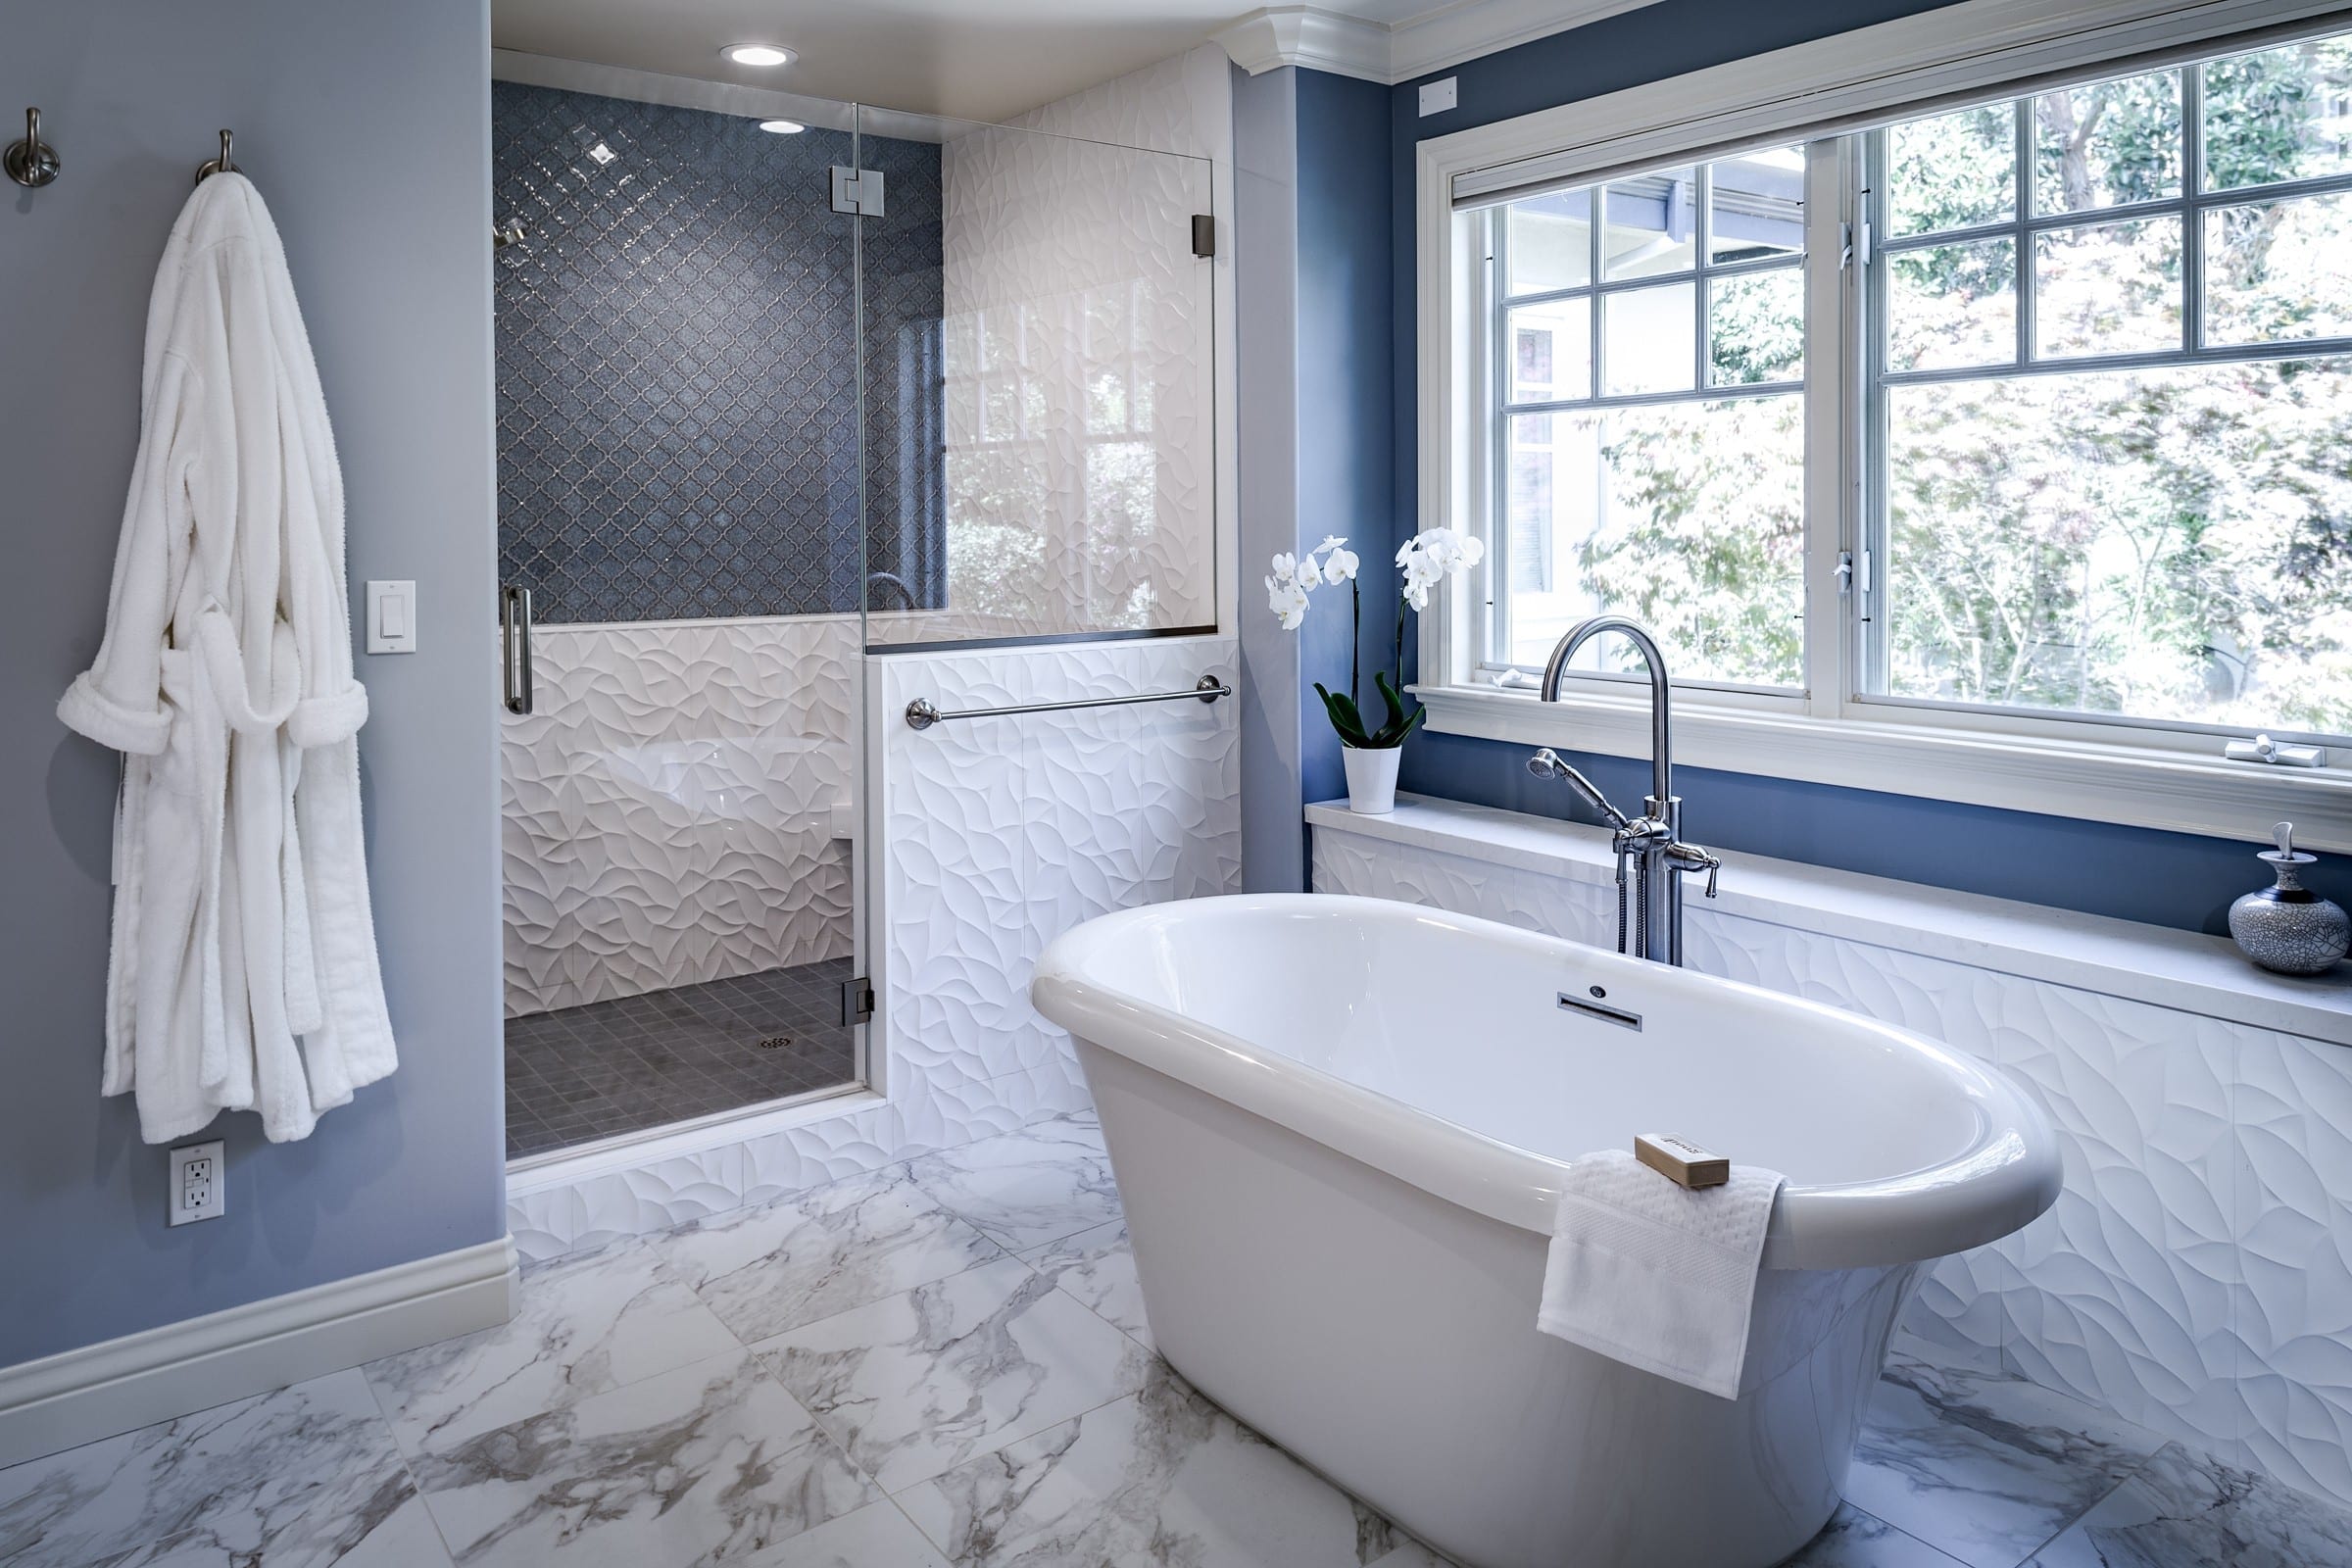 San Francicso Bay Area Home Bathroom Kitchen Remodel Costs